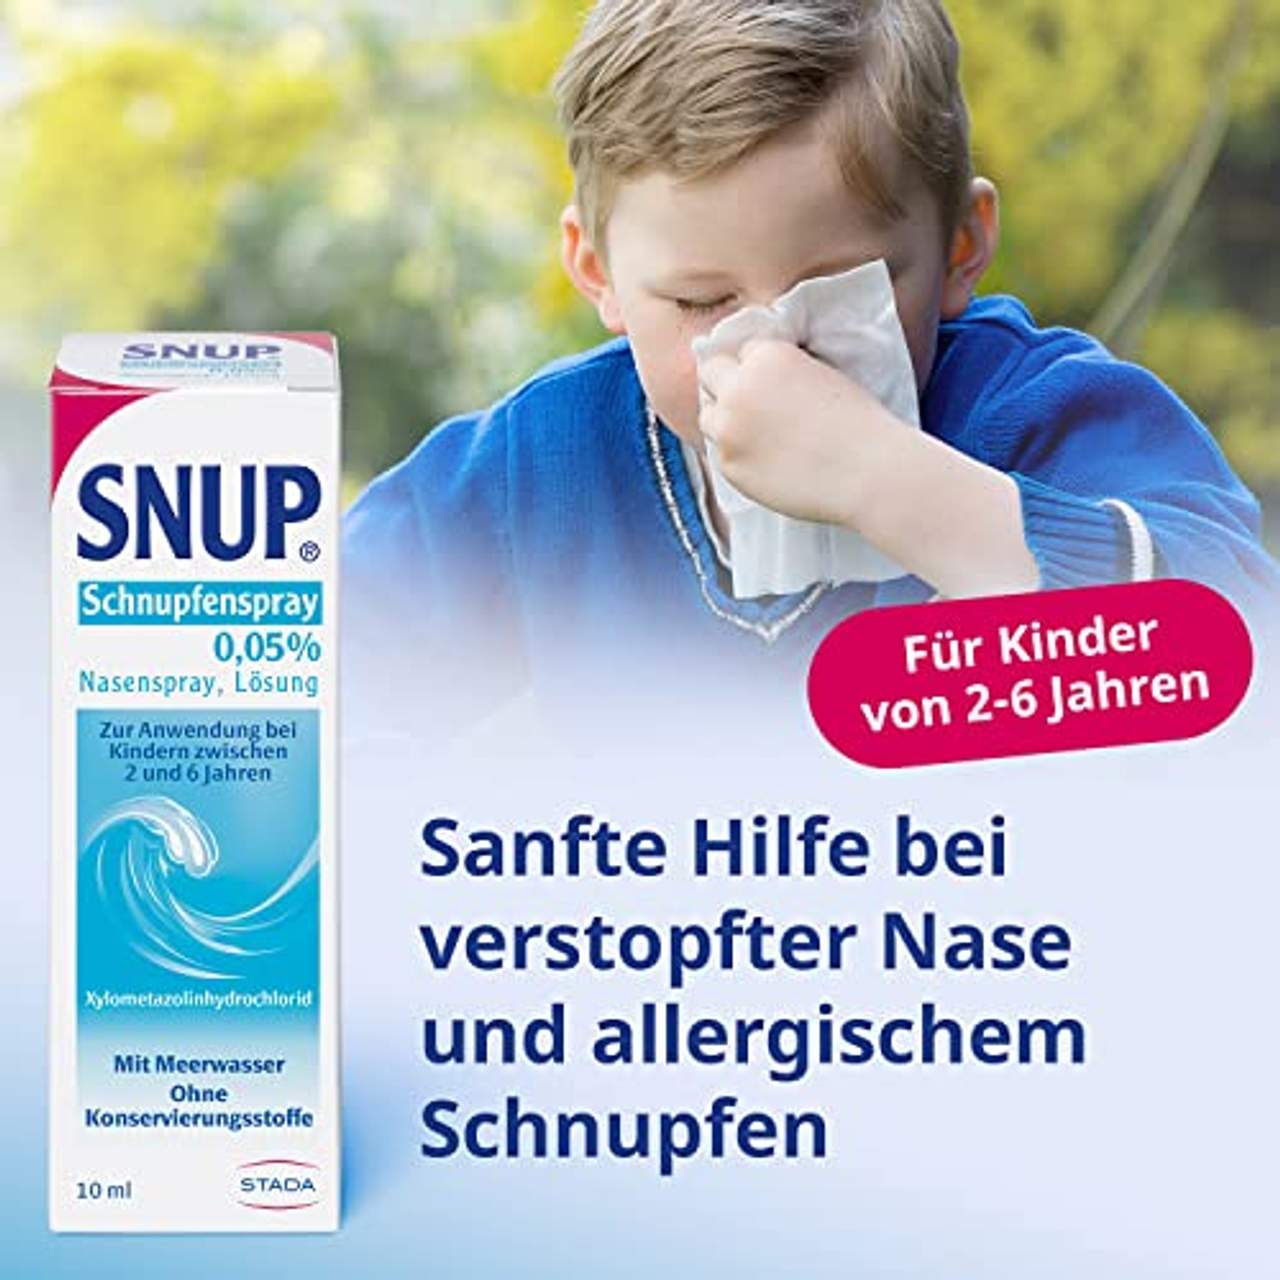 Snup Schnupfenspray 0,05% Nasenspray 10 ml